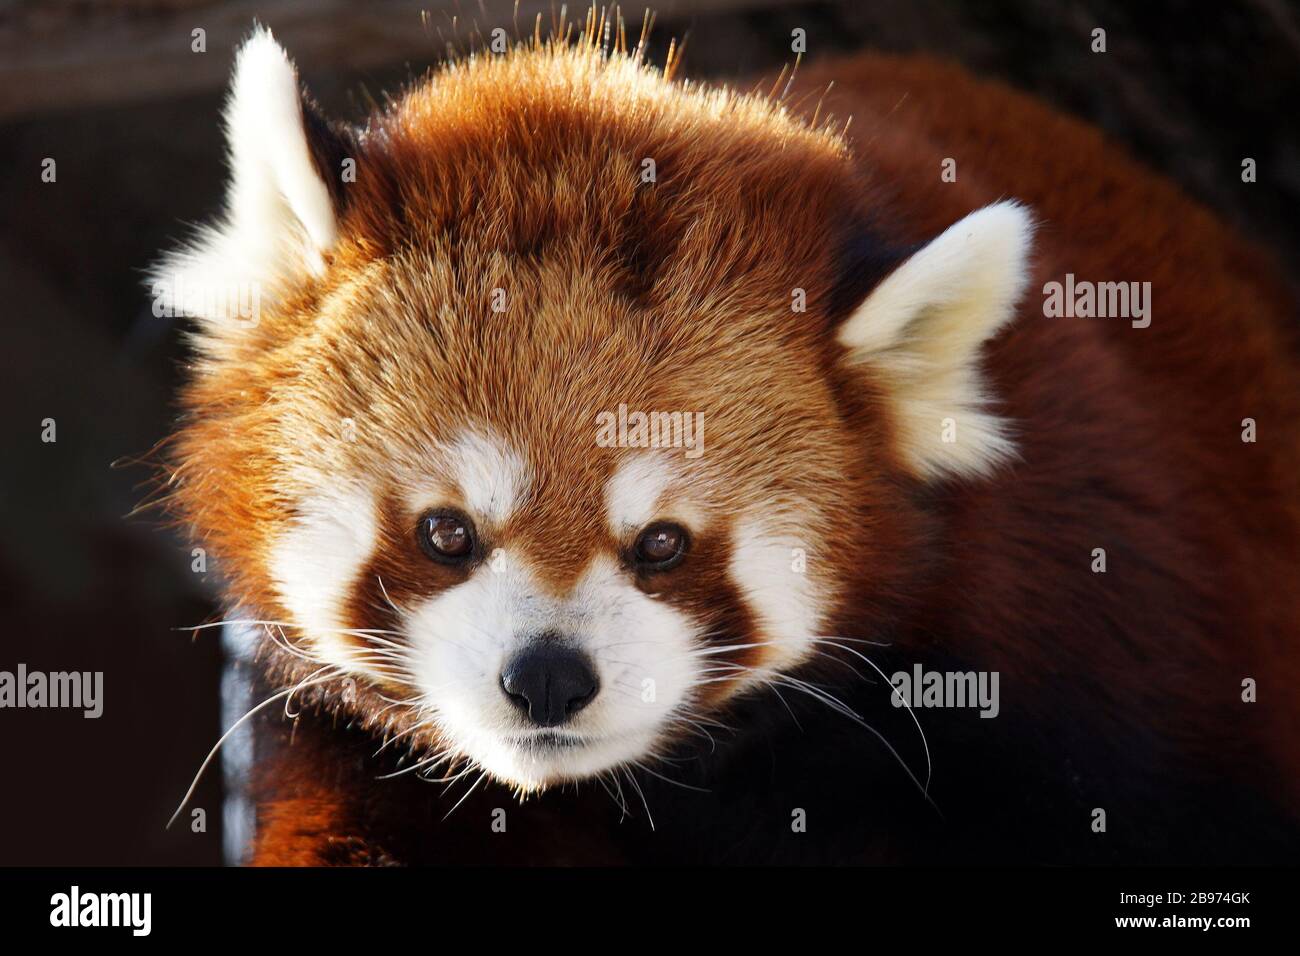 Red panda,Ailurus fulgens, portrait looking at camera Stock Photo